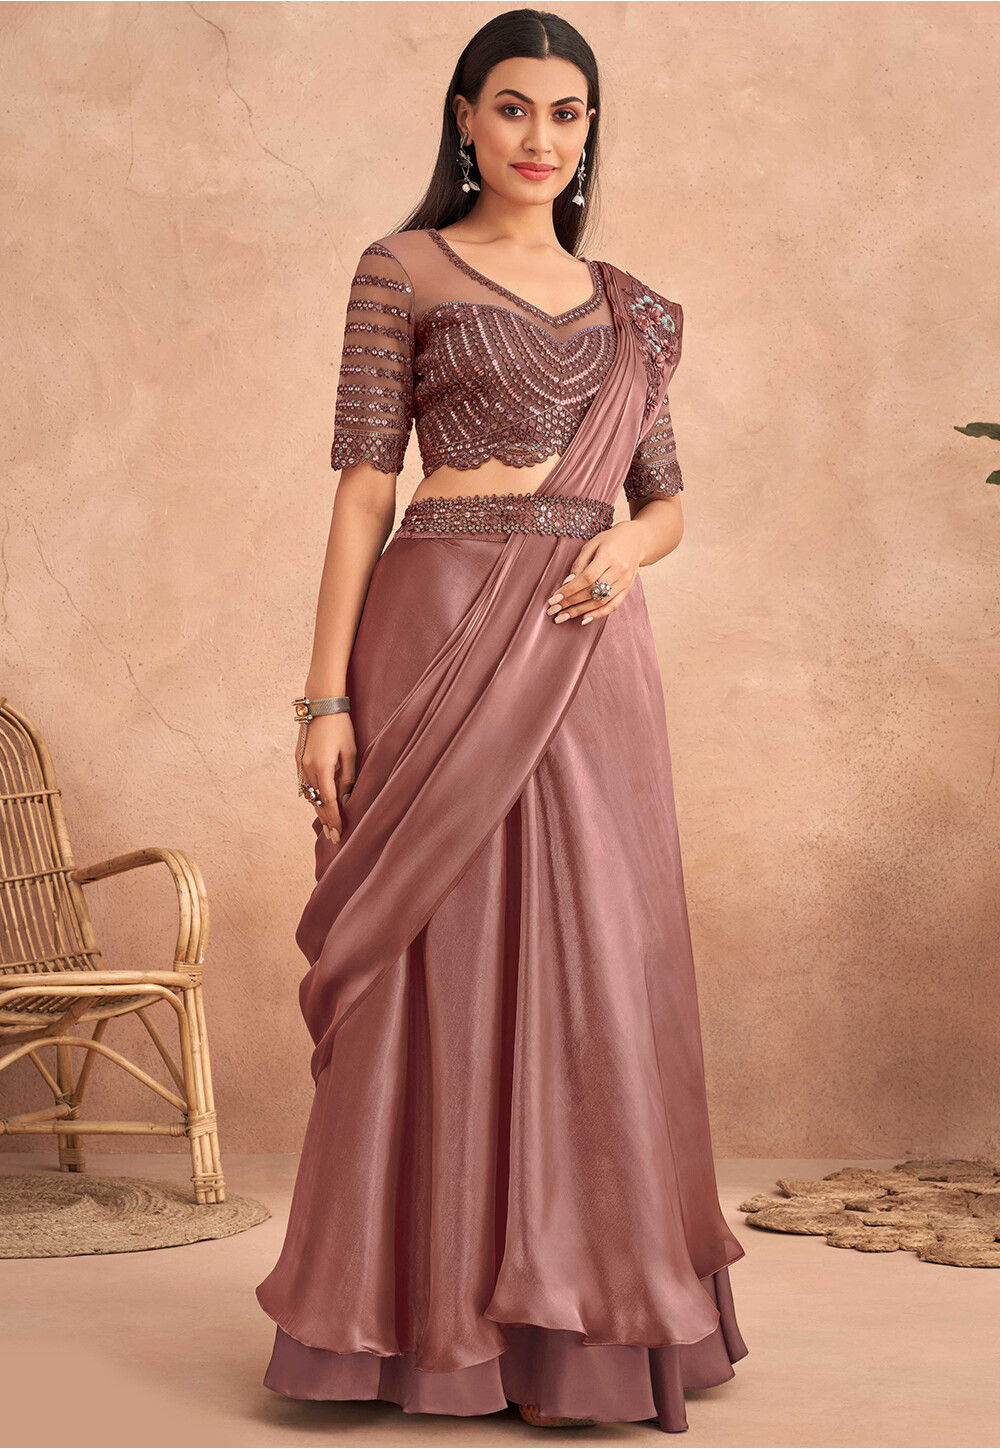 Old Silk Saree's To Make Lehnga Sets - Threads - WeRIndia | Designer saree  blouse patterns, Lehenga saree design, Saree blouse designs latest